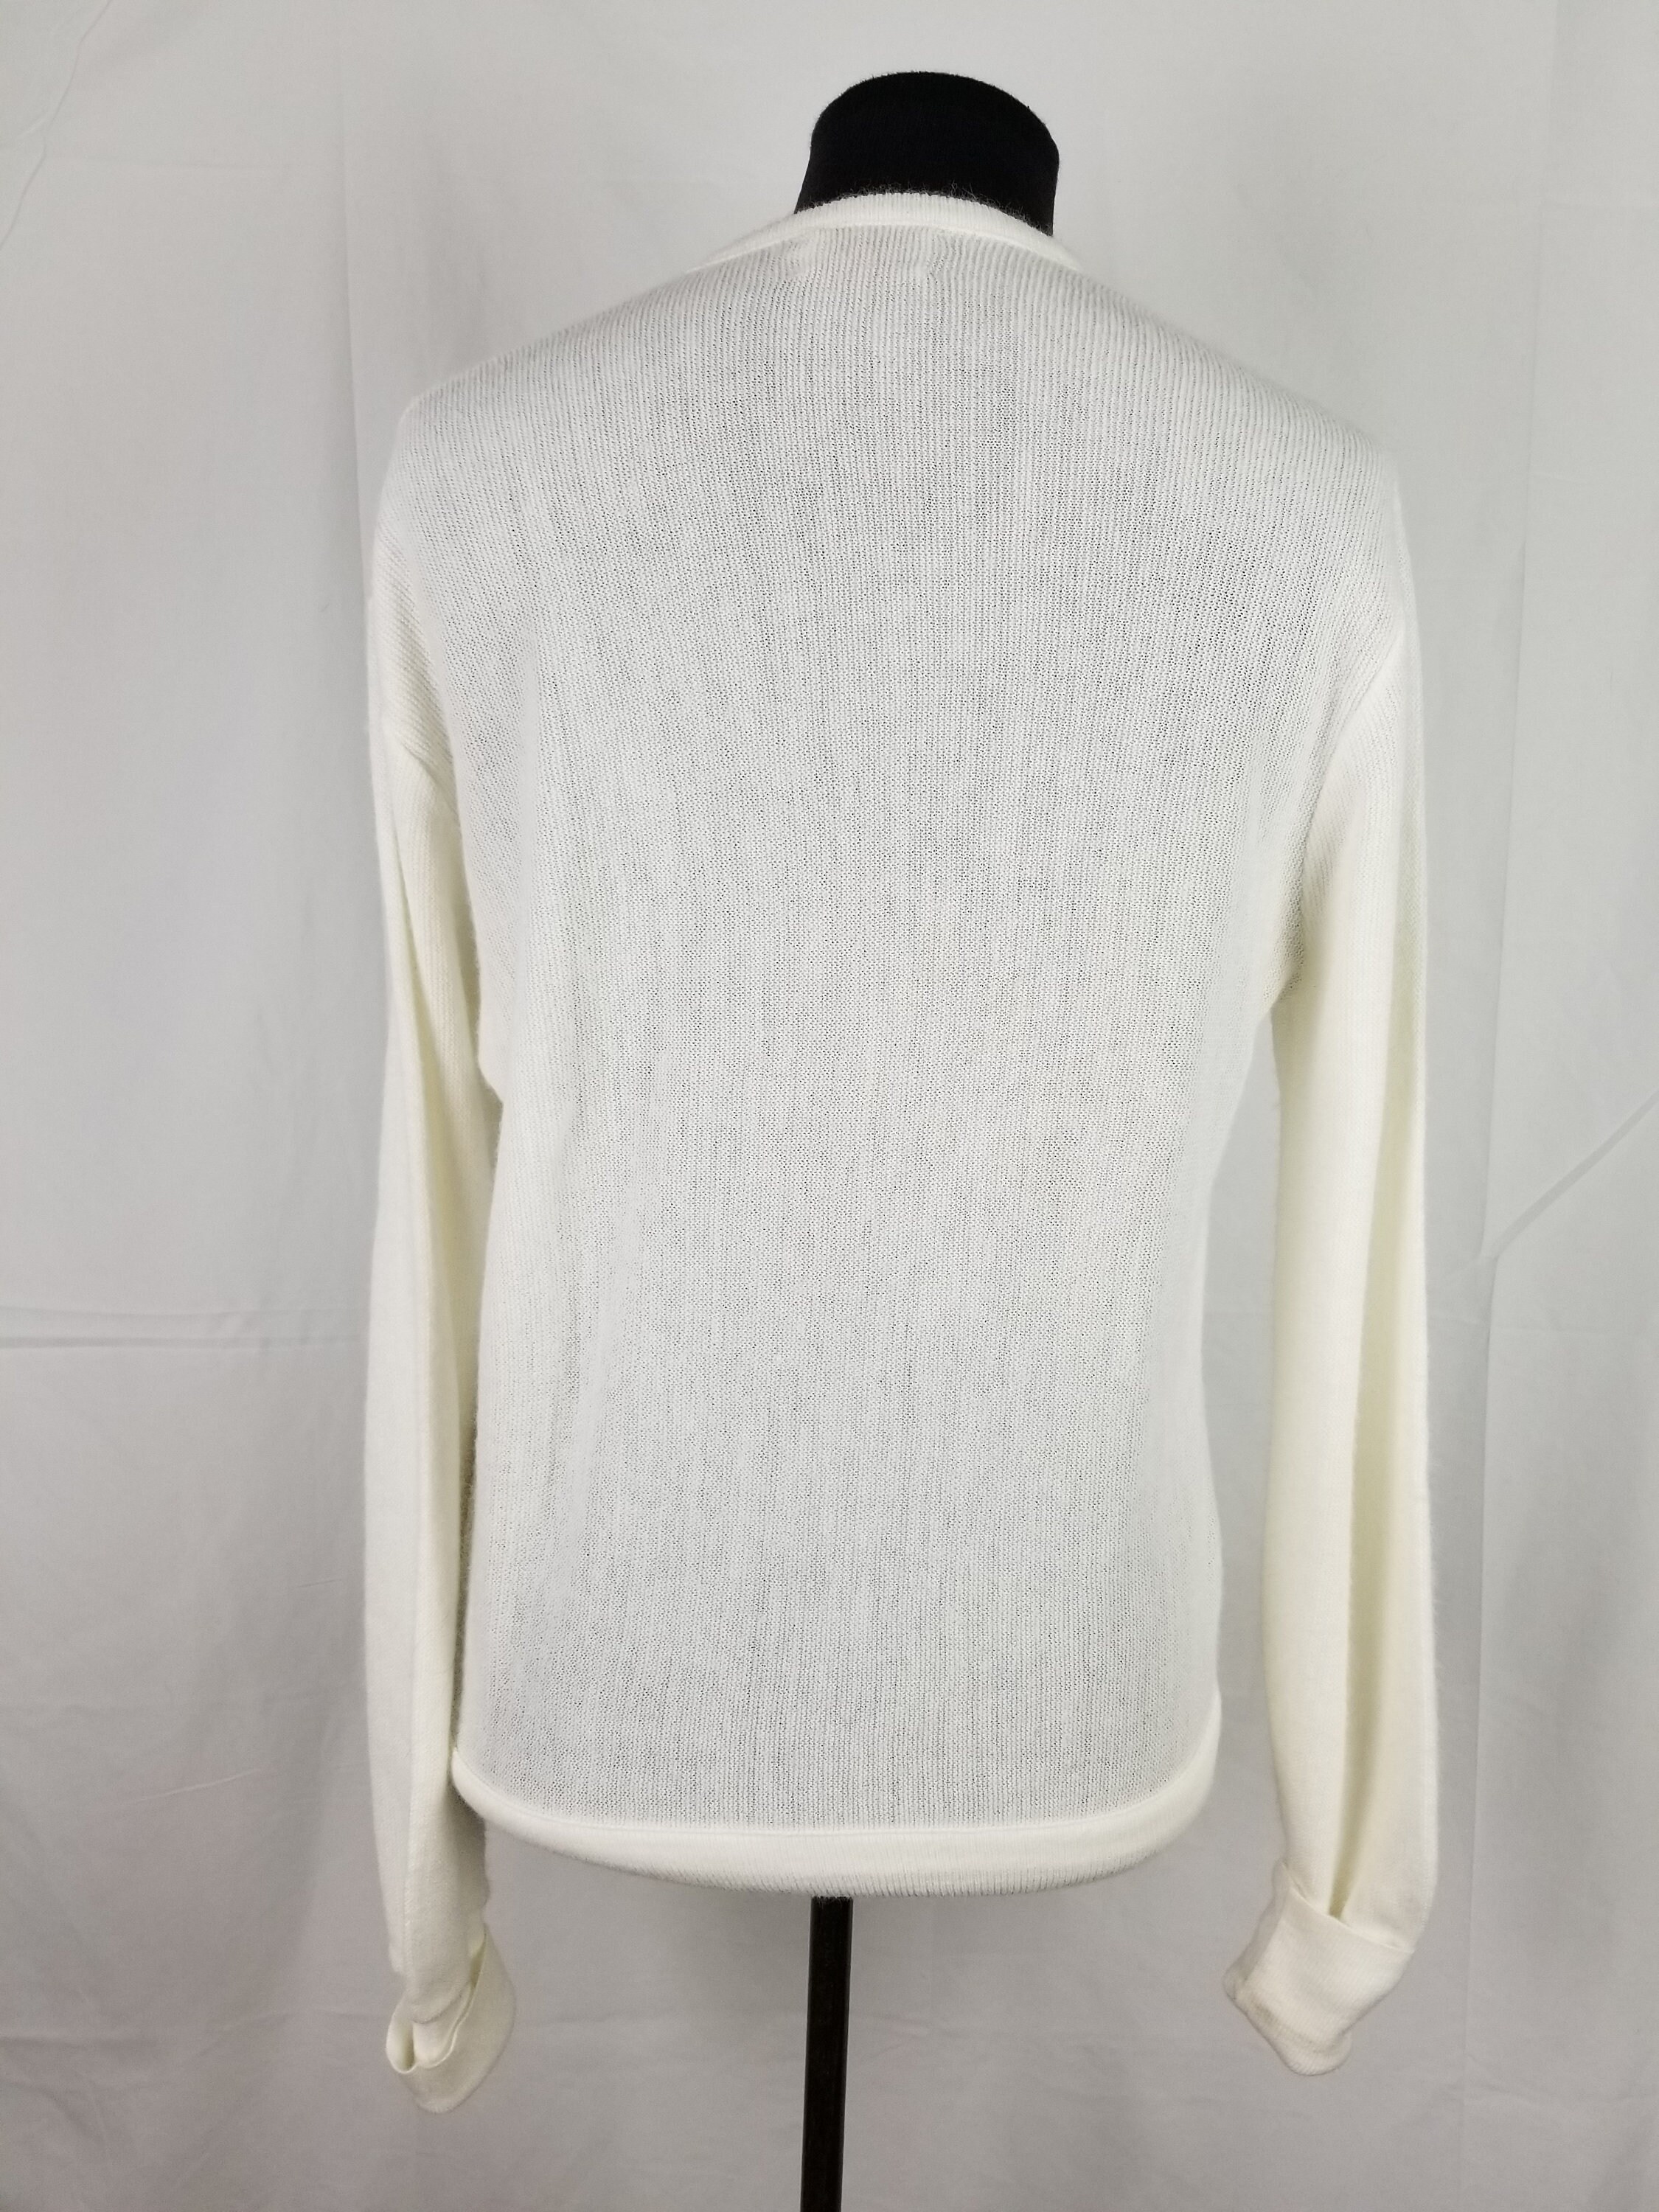 Vintage Lacoste white v-neck sweater mens 48 medium | Etsy